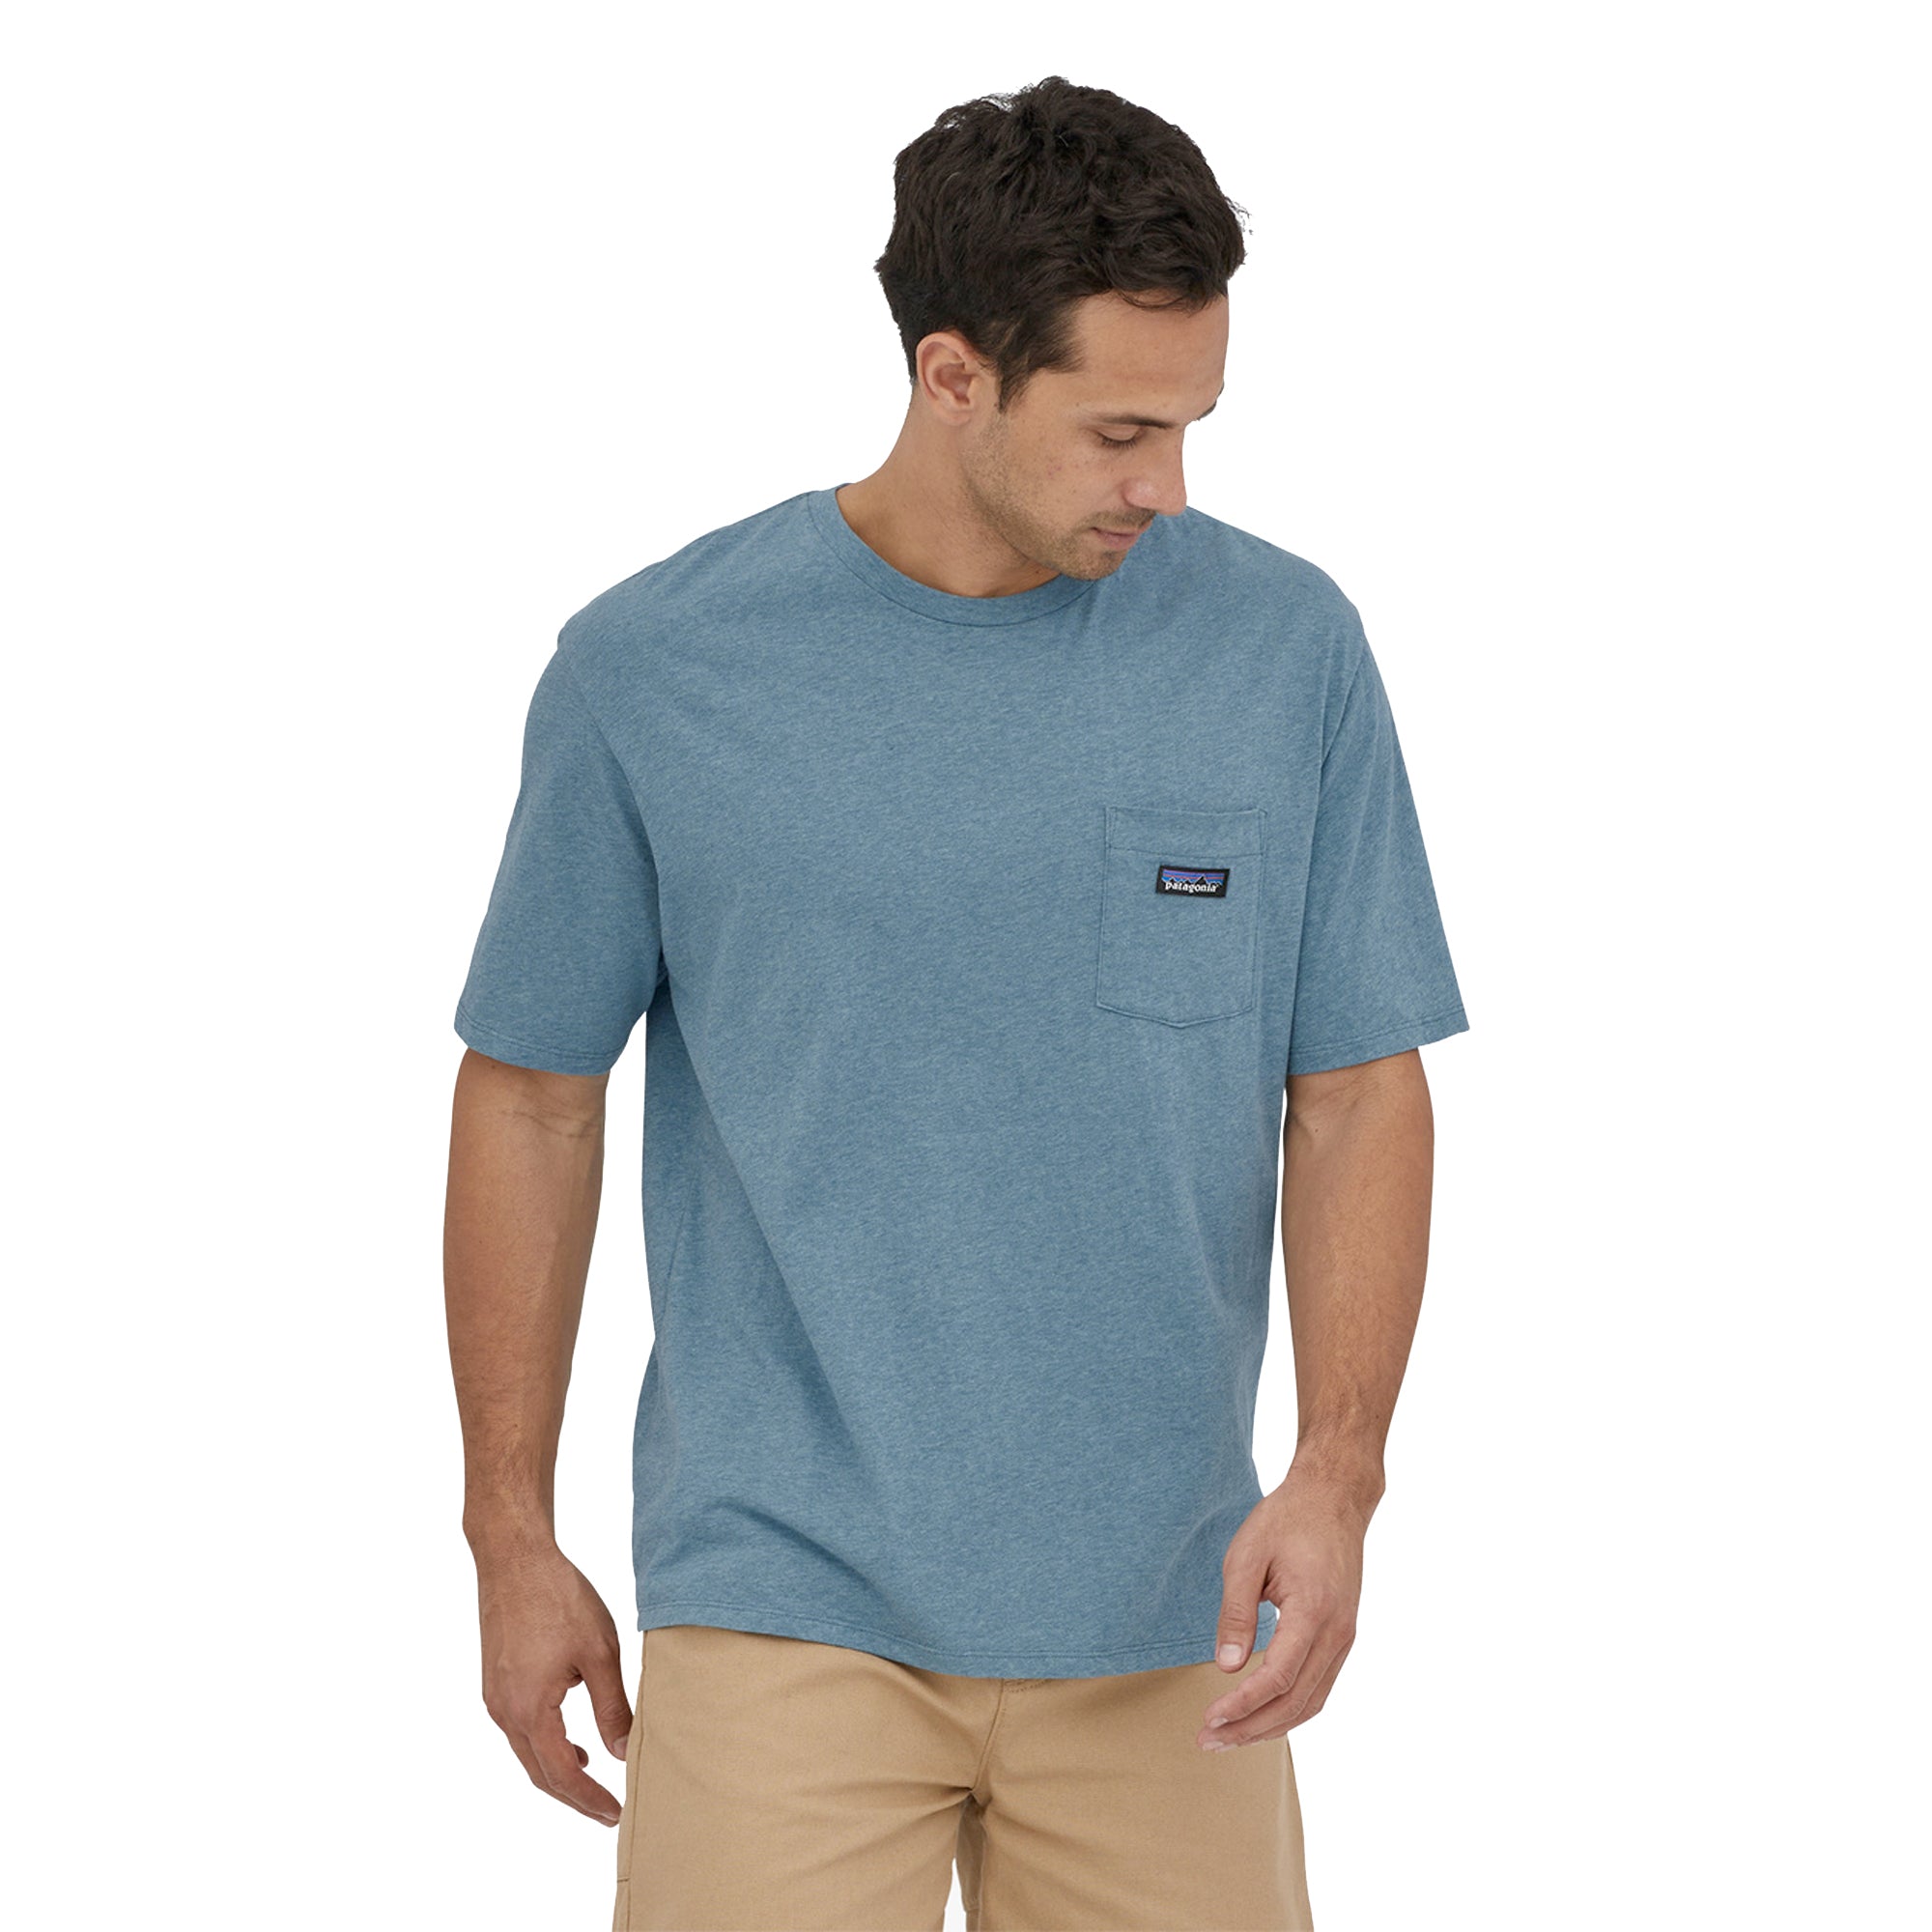 Patagonia Regenerative Organic Cotton Men's S/S T-Shirt